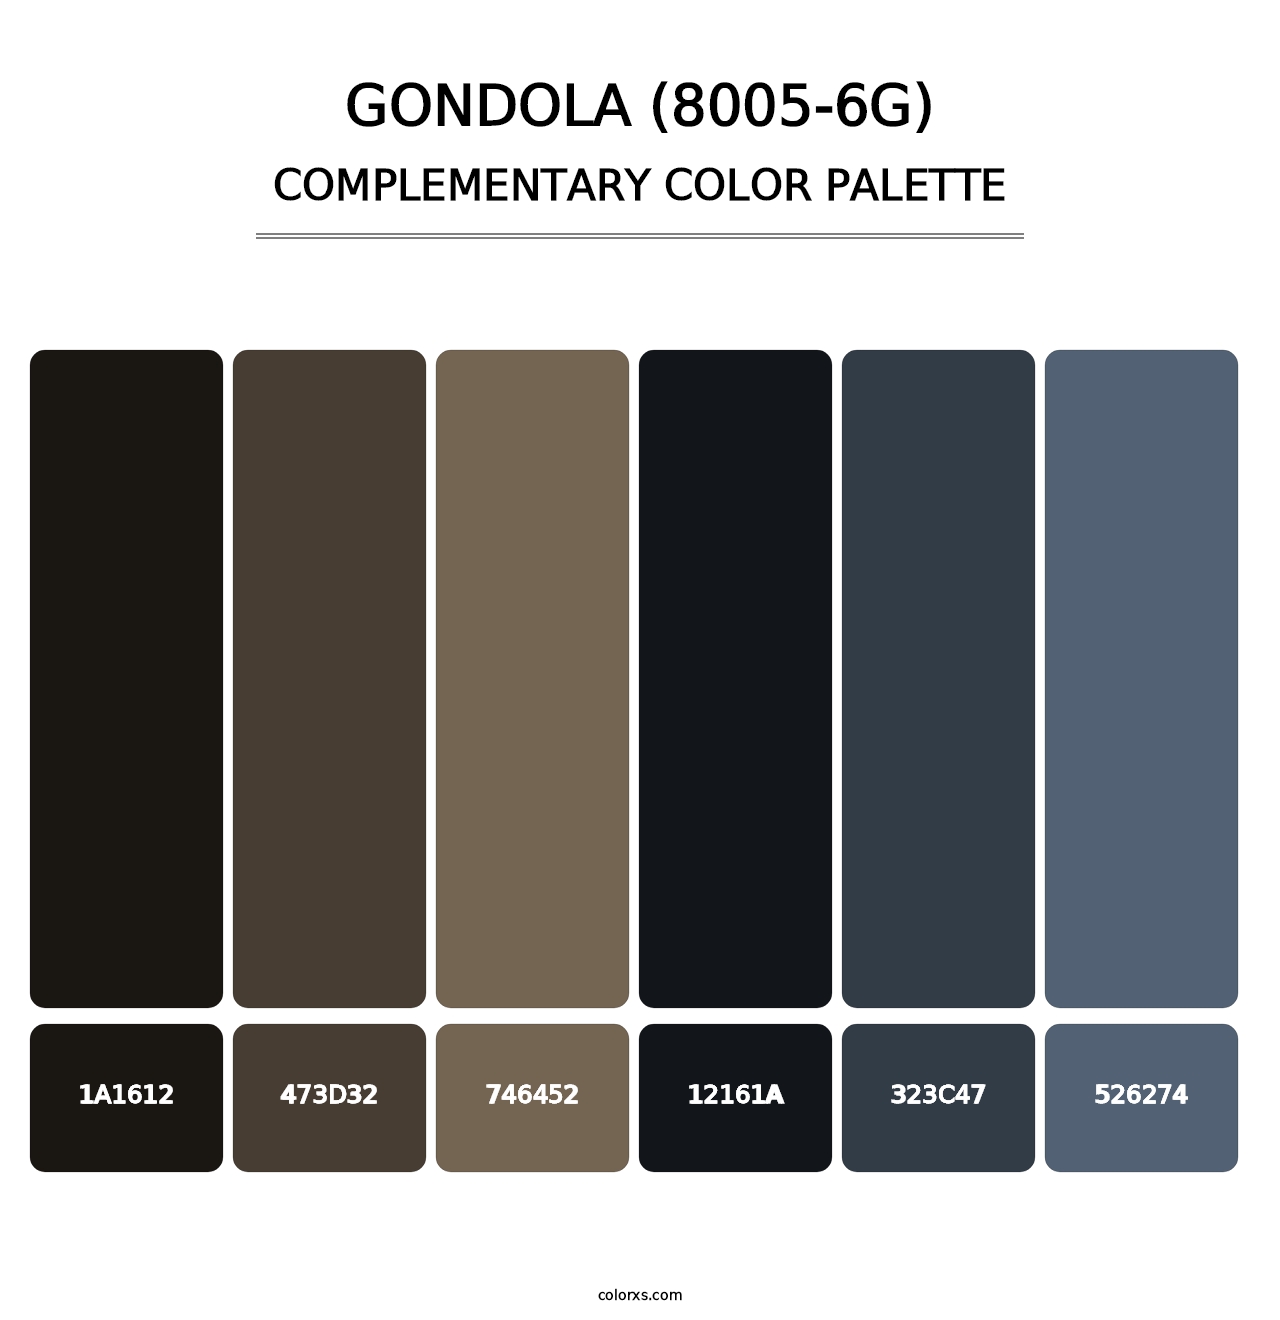 Gondola (8005-6G) - Complementary Color Palette